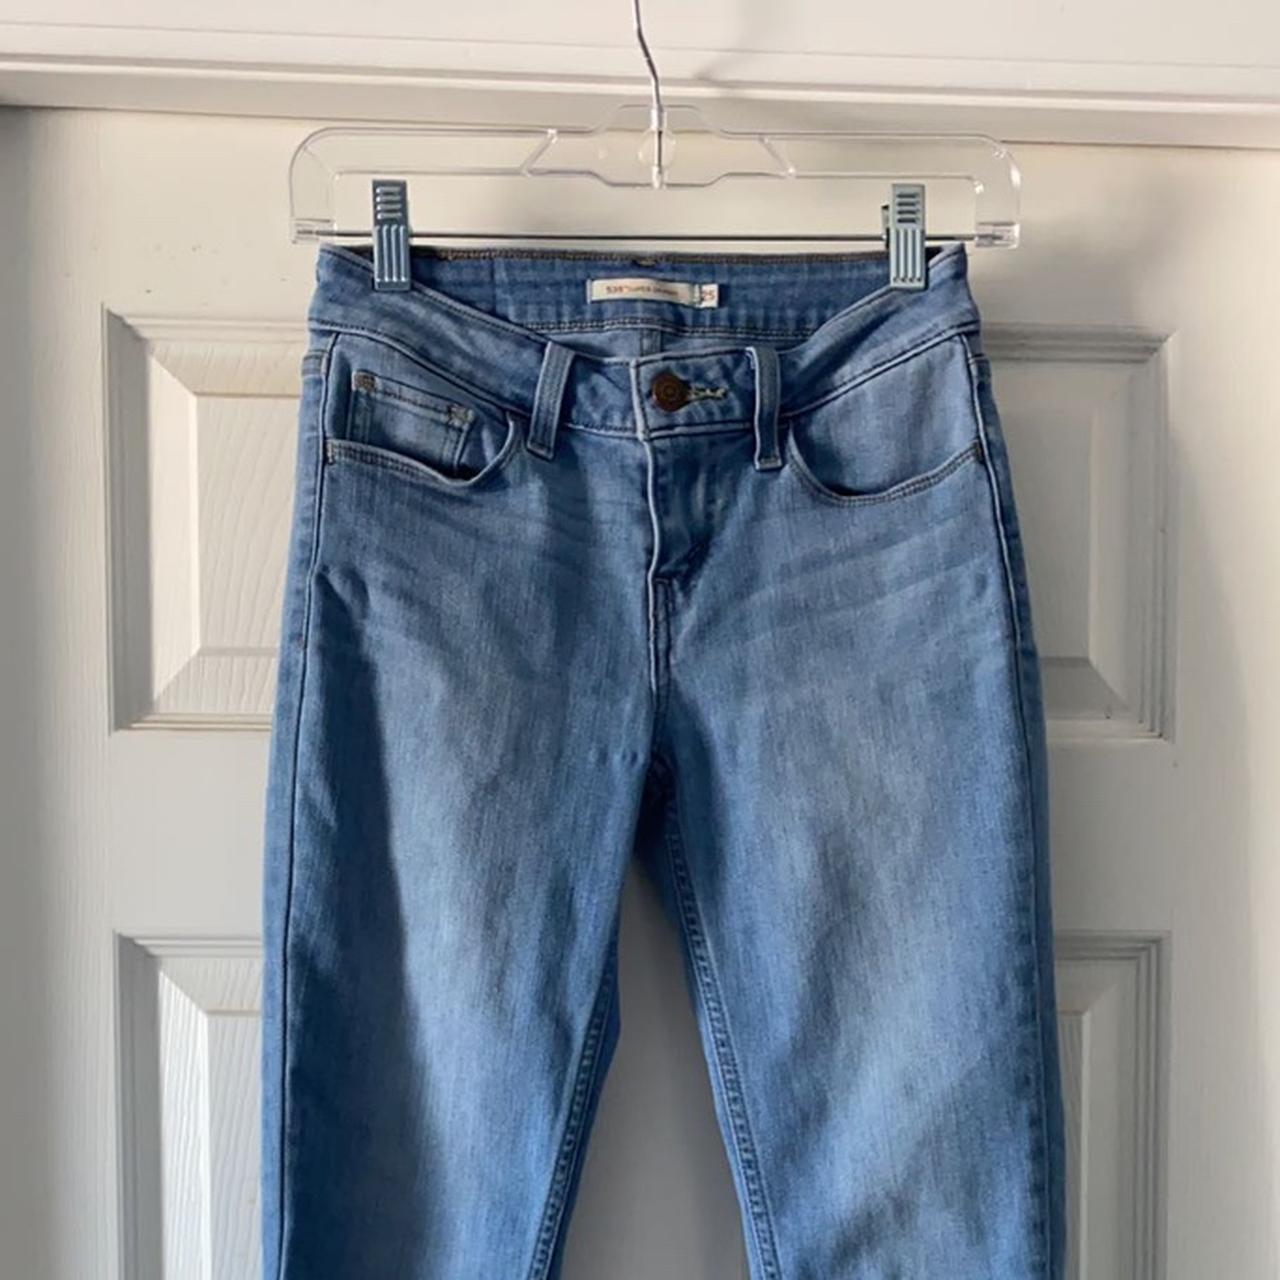 Levi super skinny jeans Size 25 In great... - Depop